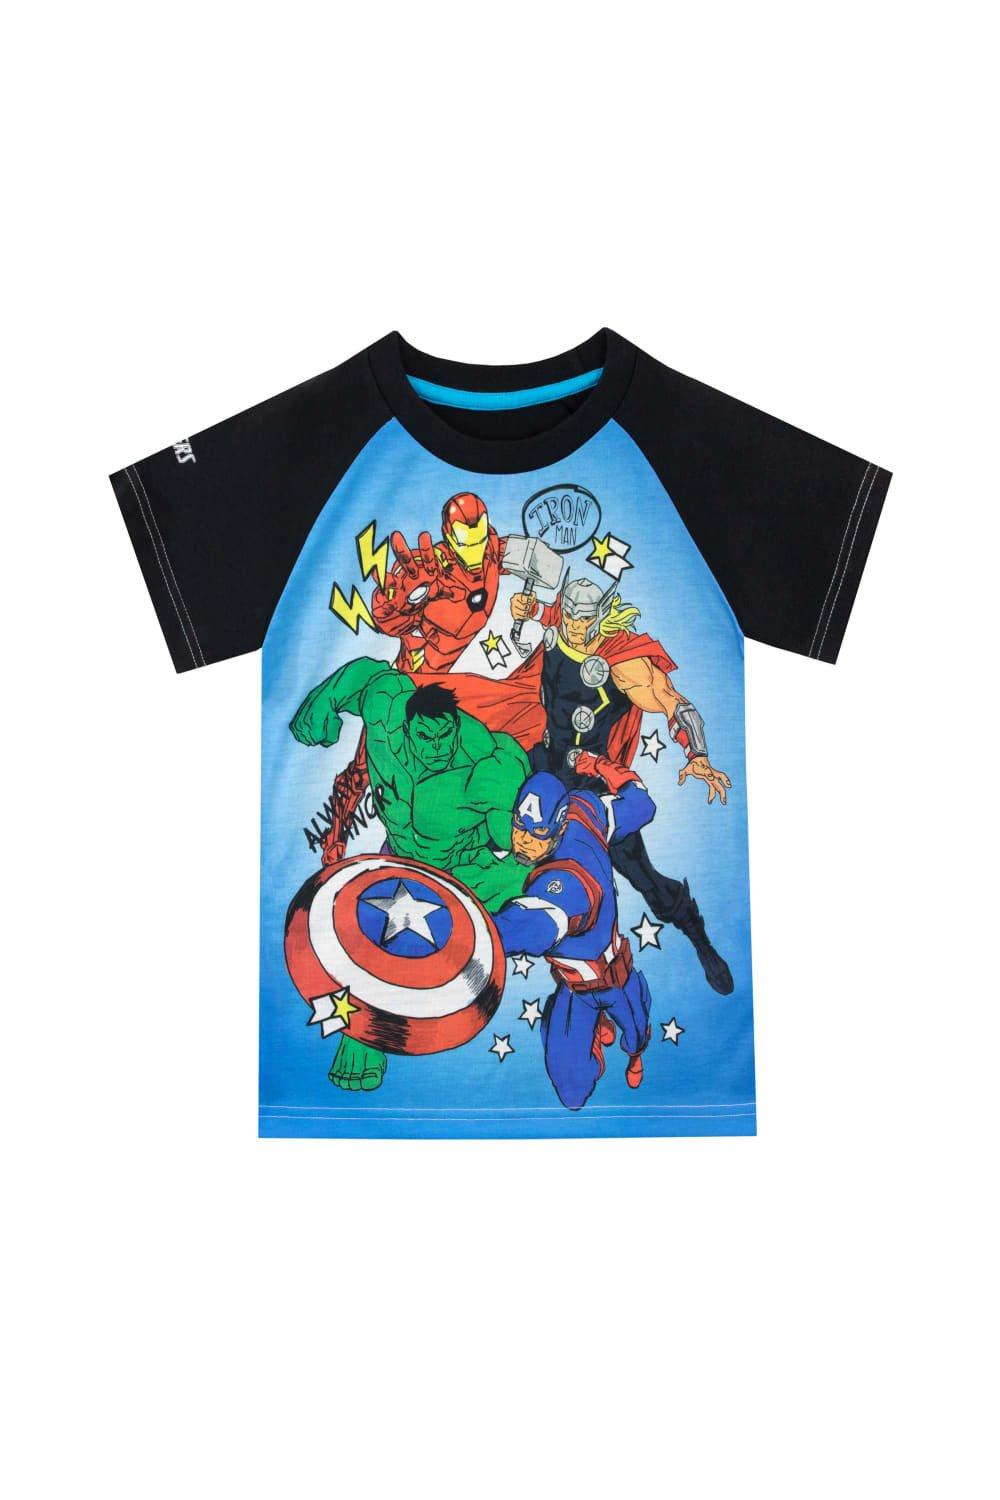 Avengers Character Sketch T-Shirt